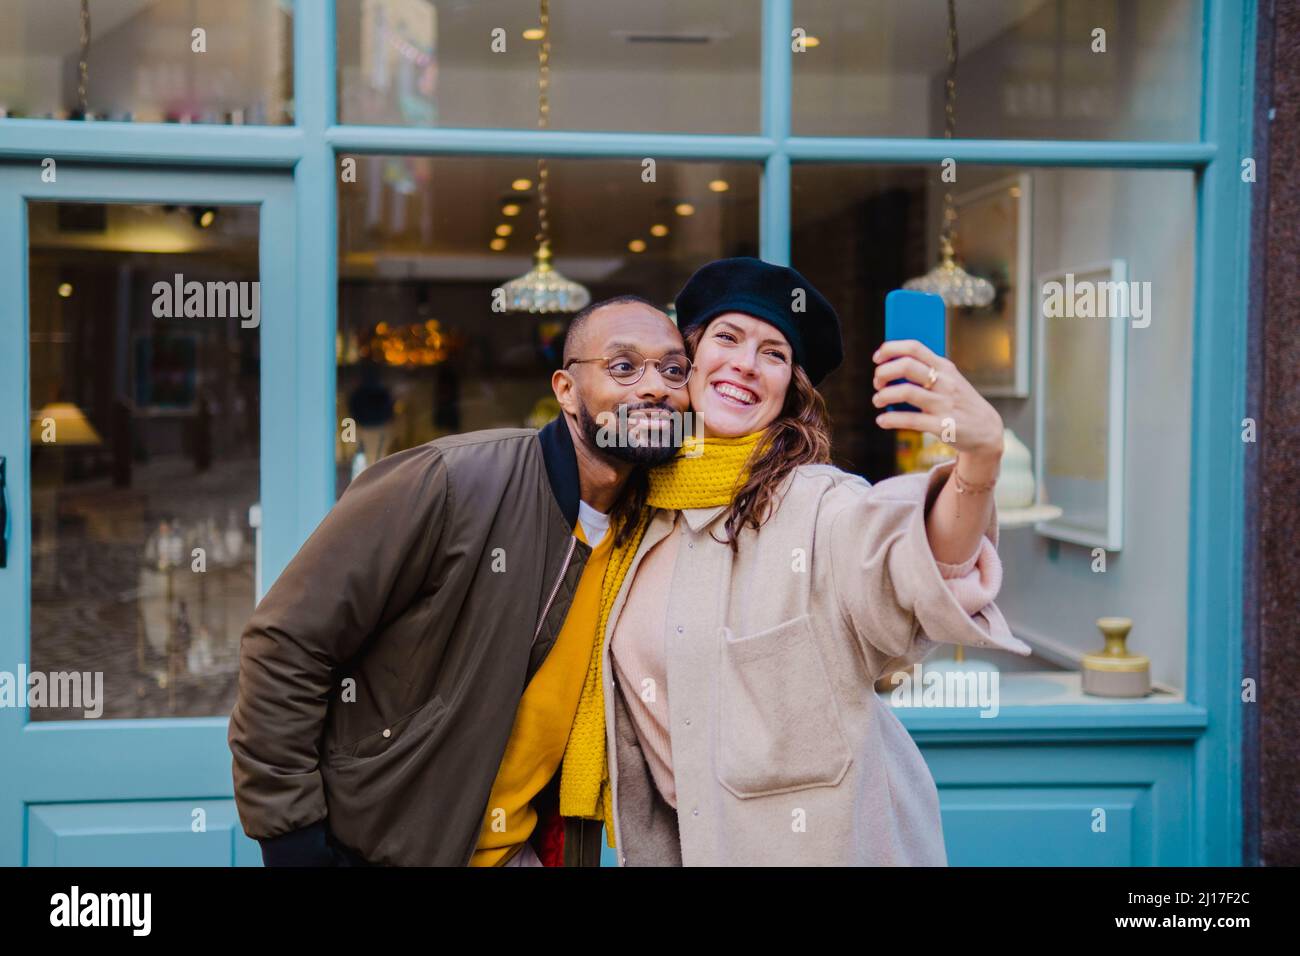 Smiling couple taking selfie on smart phone outside cafe Stock Photo